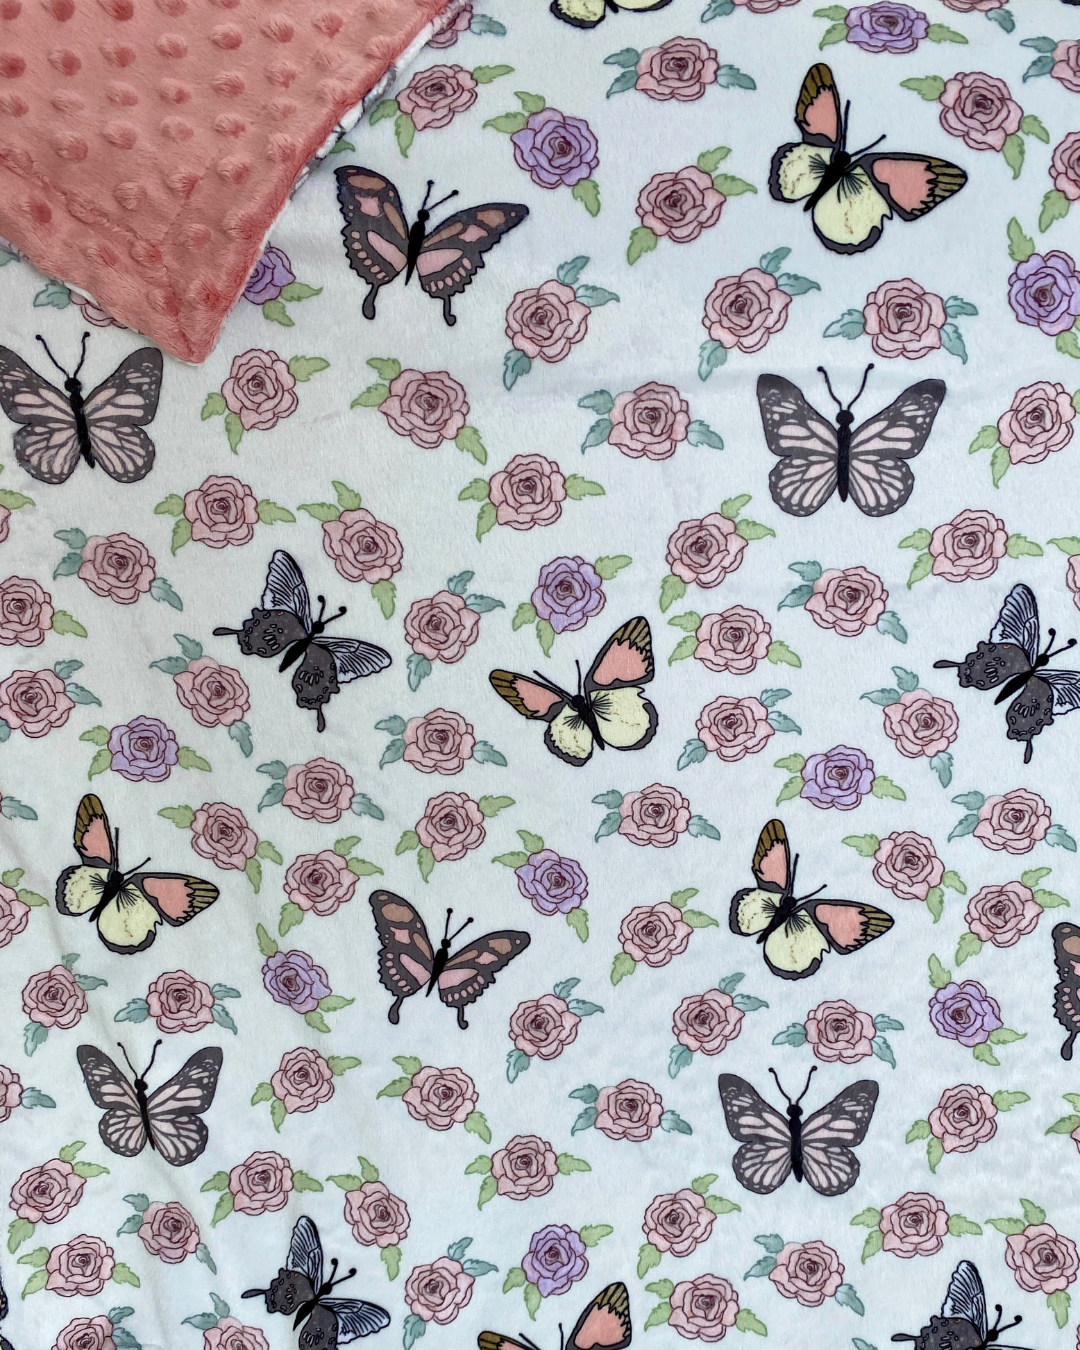 Baby Blanket: Butterflies in a rose garden (pink minky)